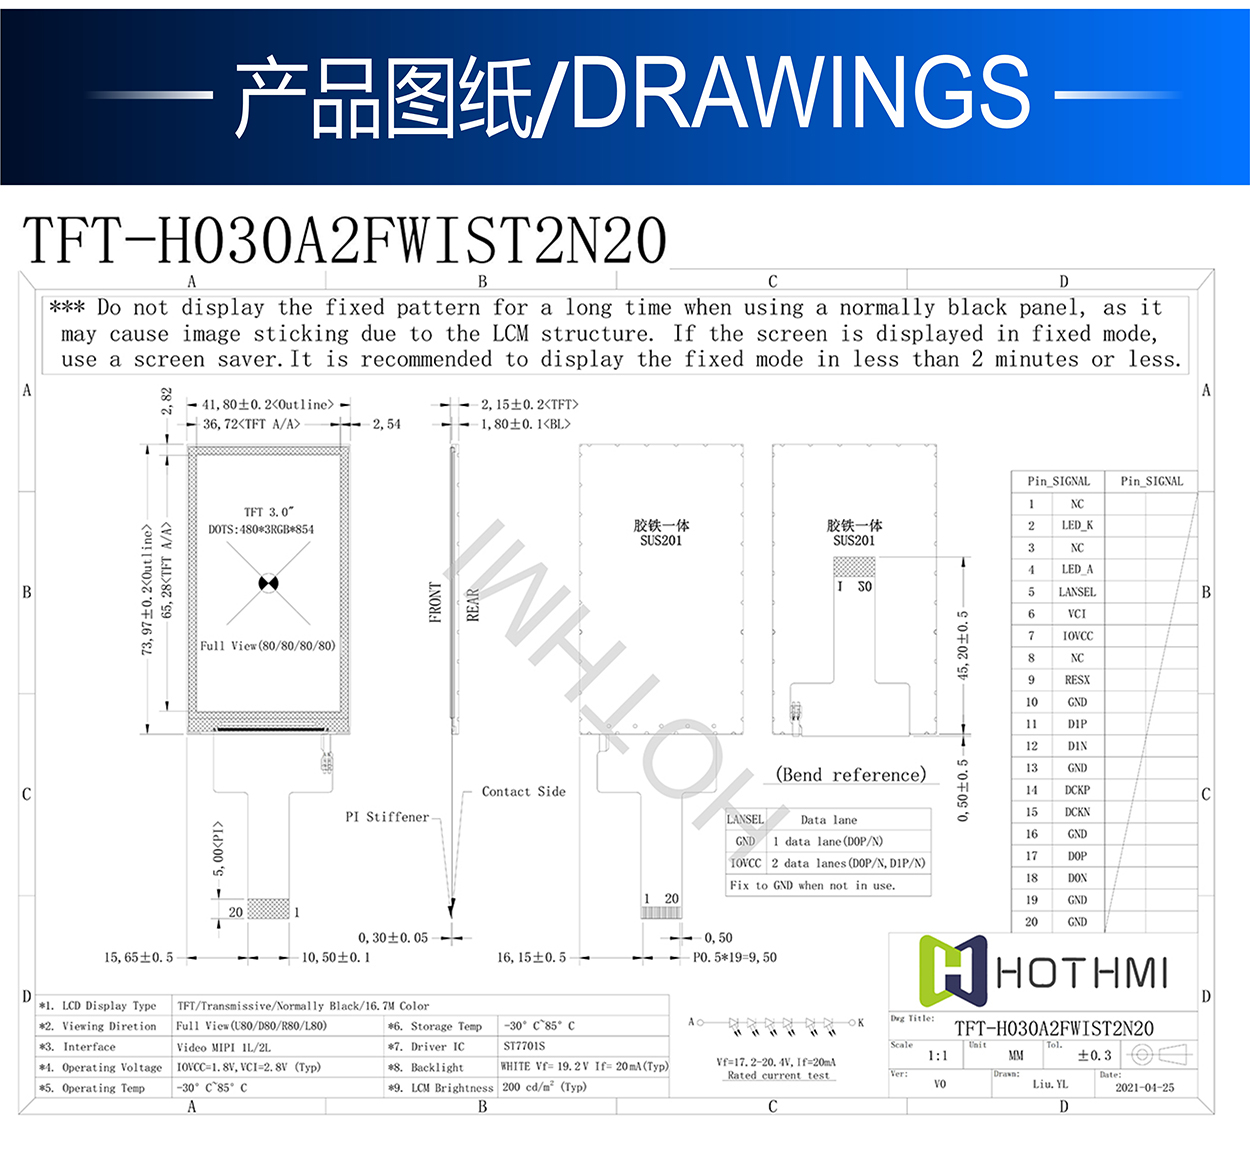 3.0寸TFT-H030A2FWIST2N2..